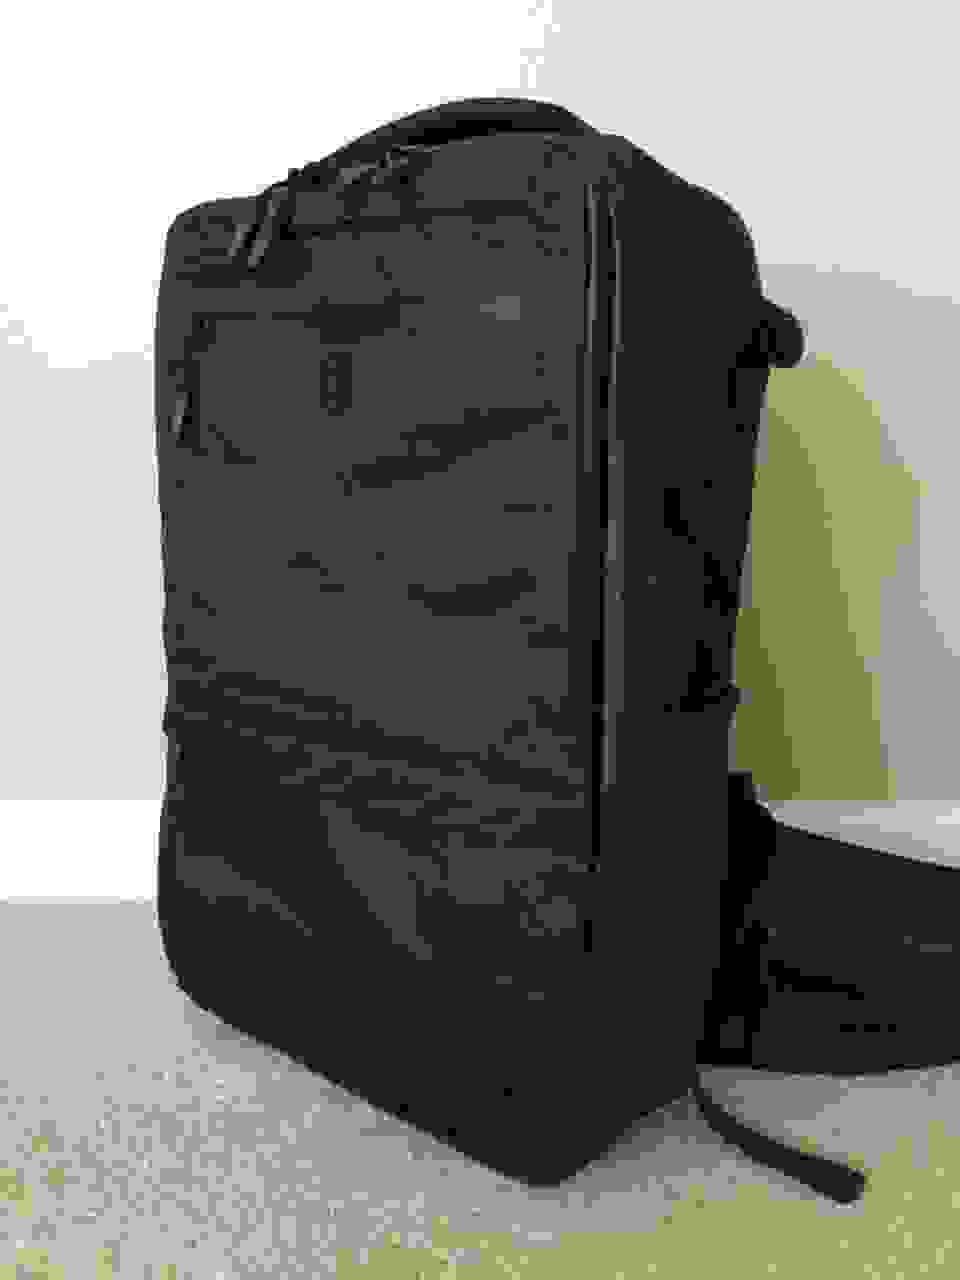 Tortuga Outbreaker Backpack